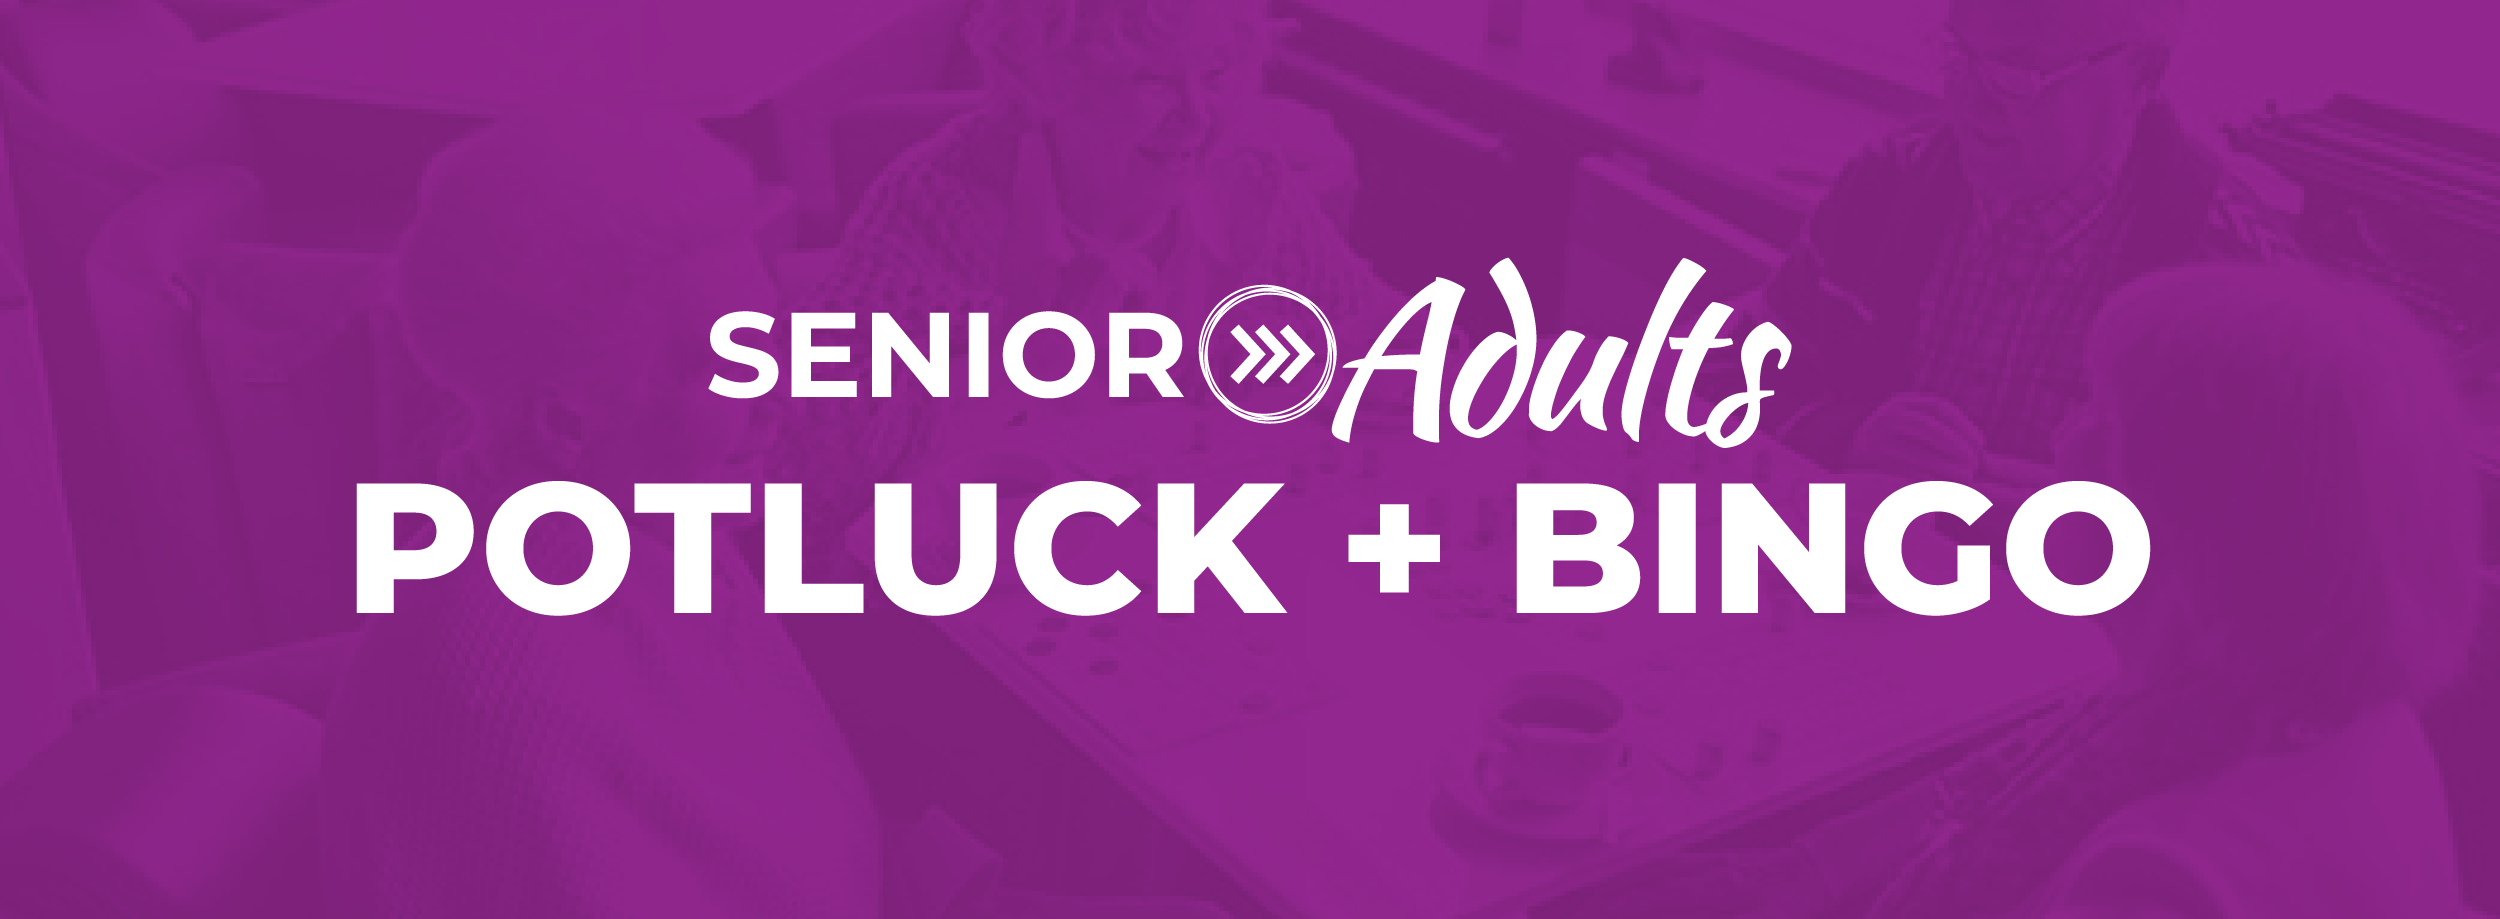 Senior Adult Potluck + Bingo